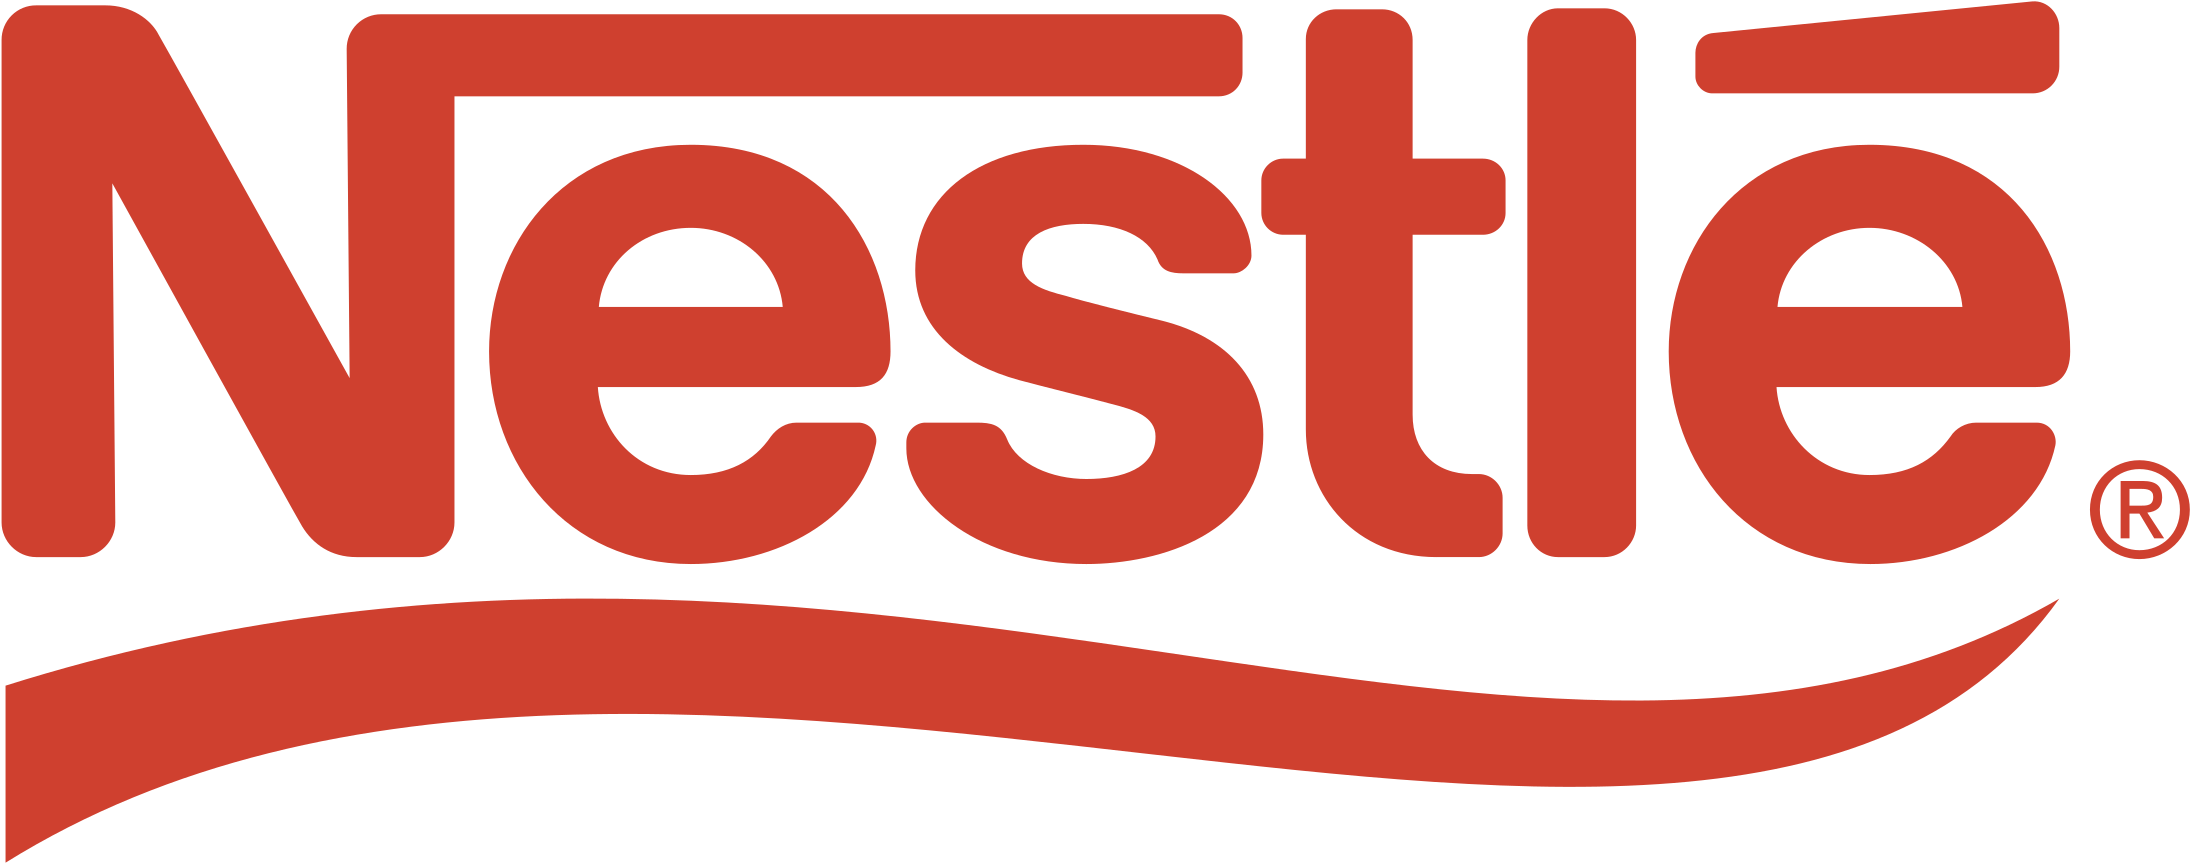 Nestle Chocolate Logo Png Transparent - Logos Nestle (2400x2400), Png Download